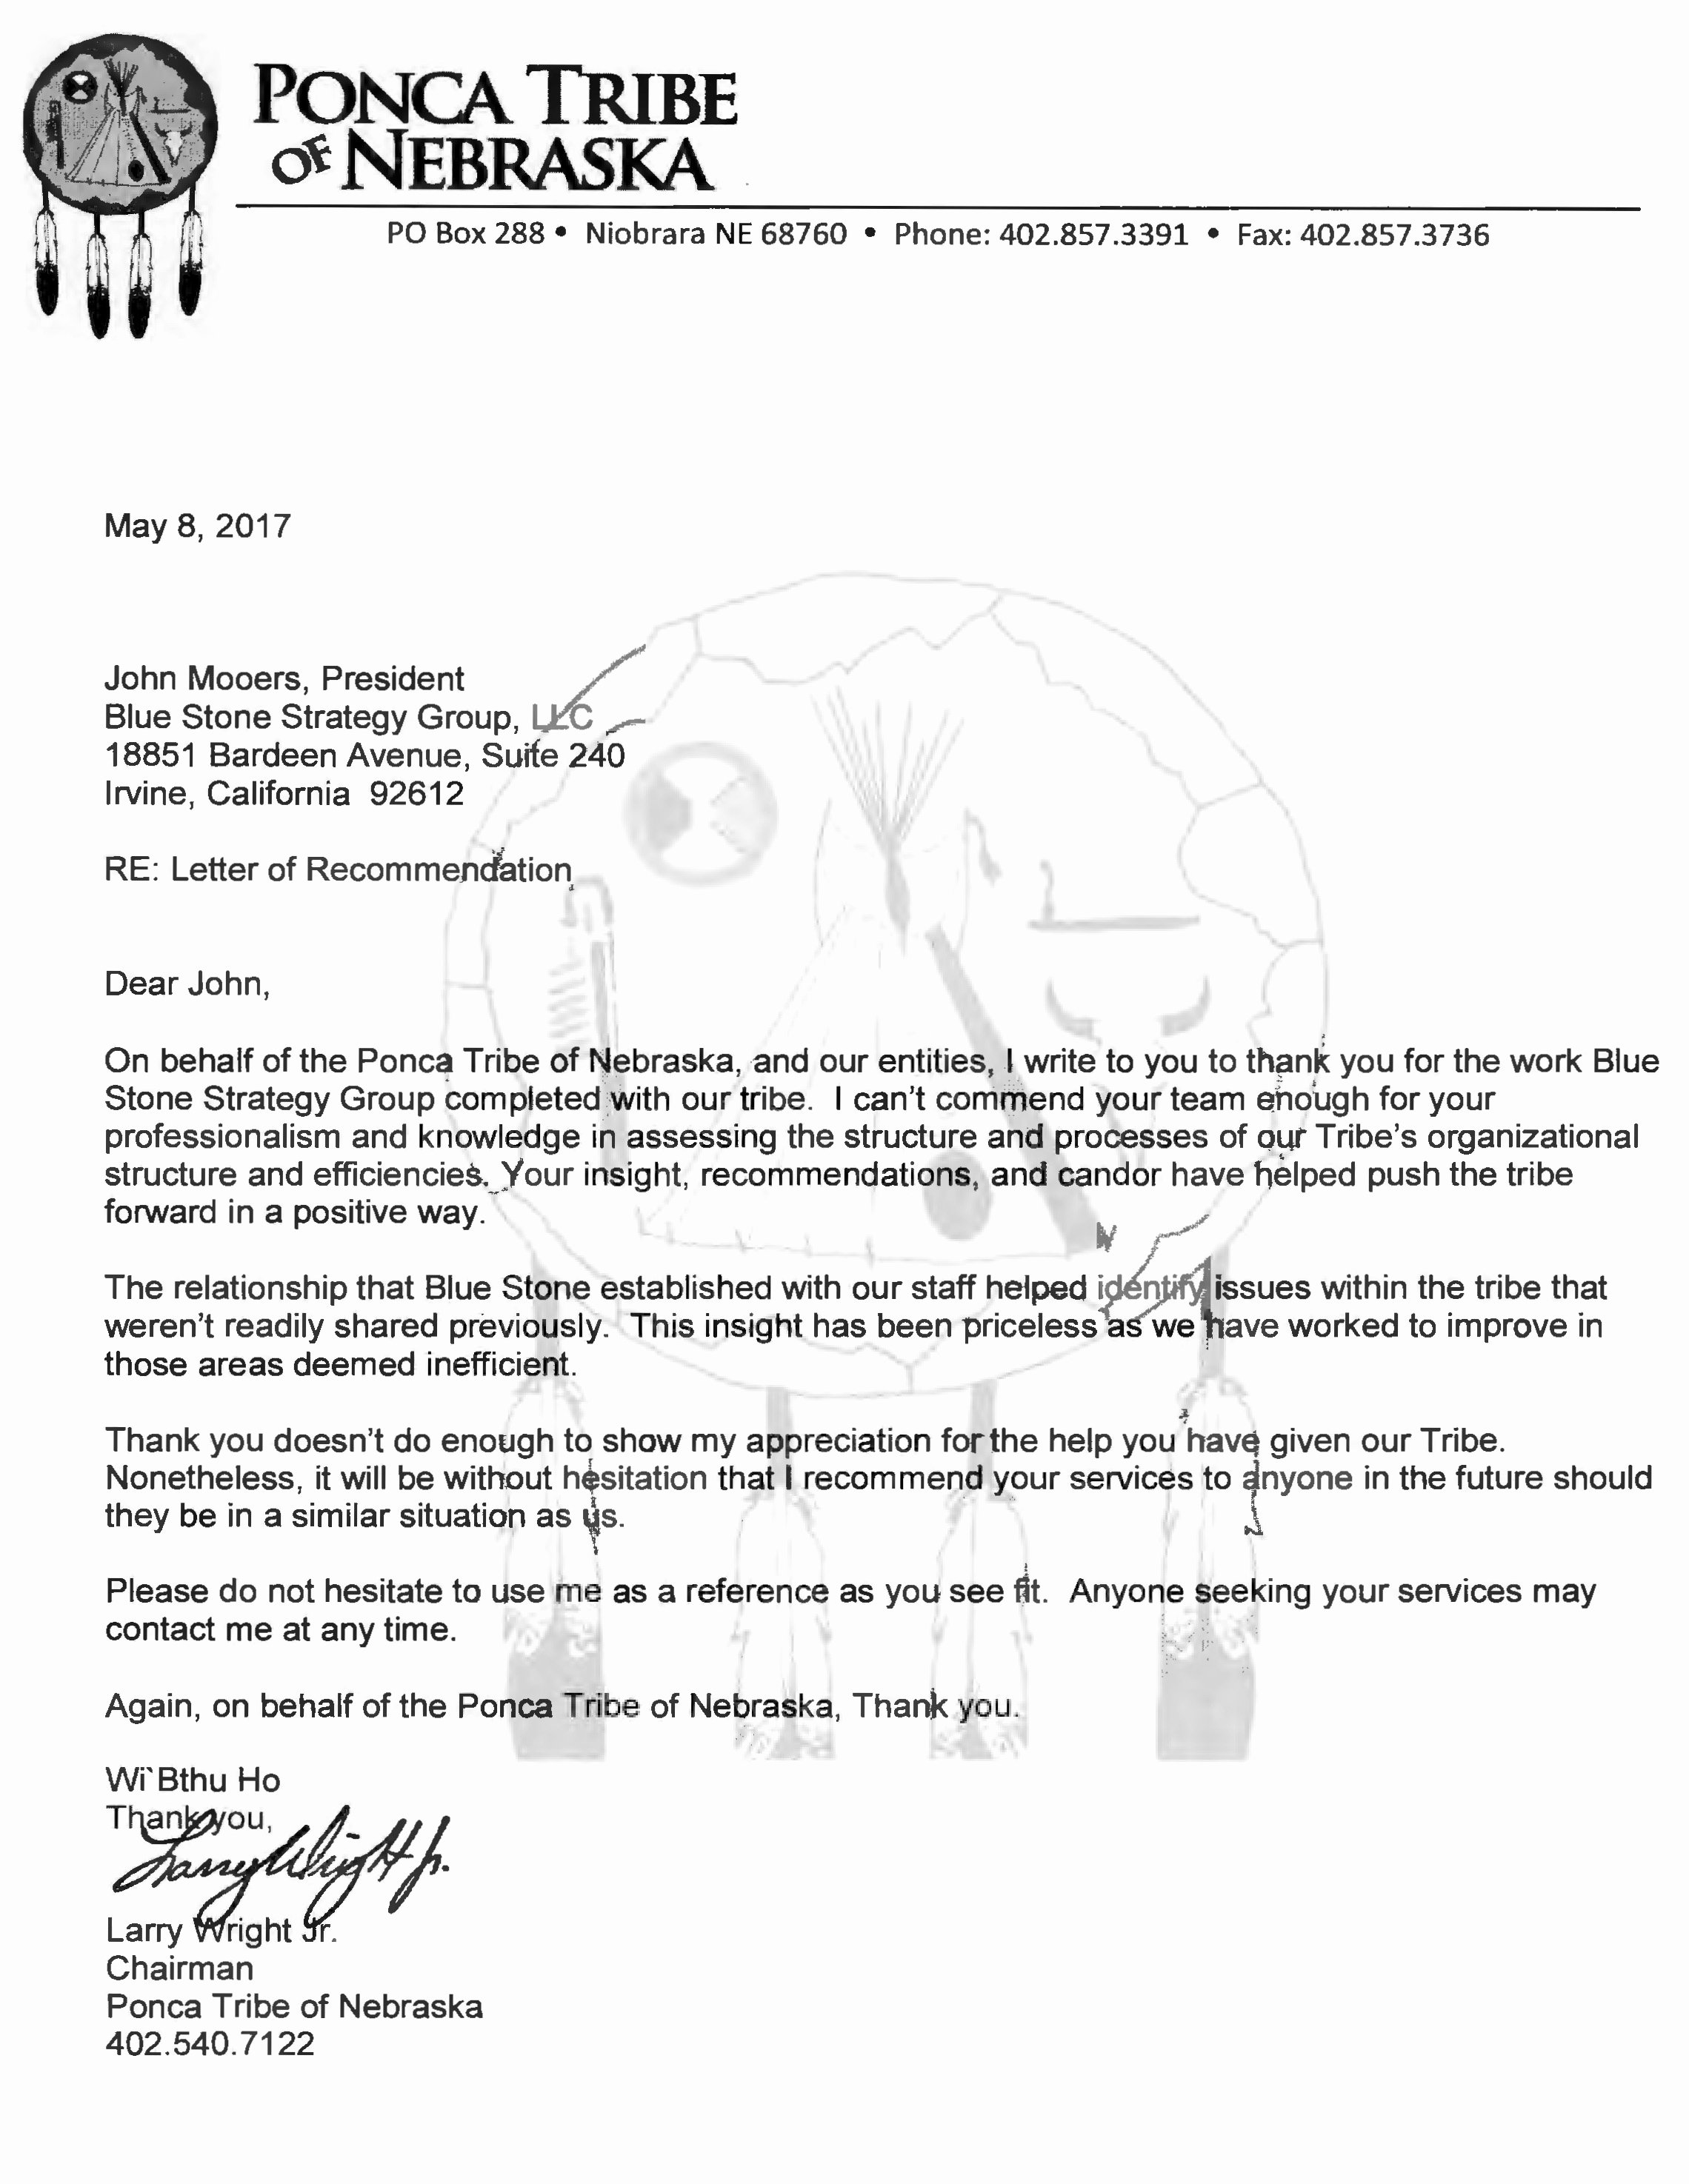 John Nash Letter Of Recommendation Awesome Bssg Ponca Of Nebraska Letter Of Re Mendation 05 08 17